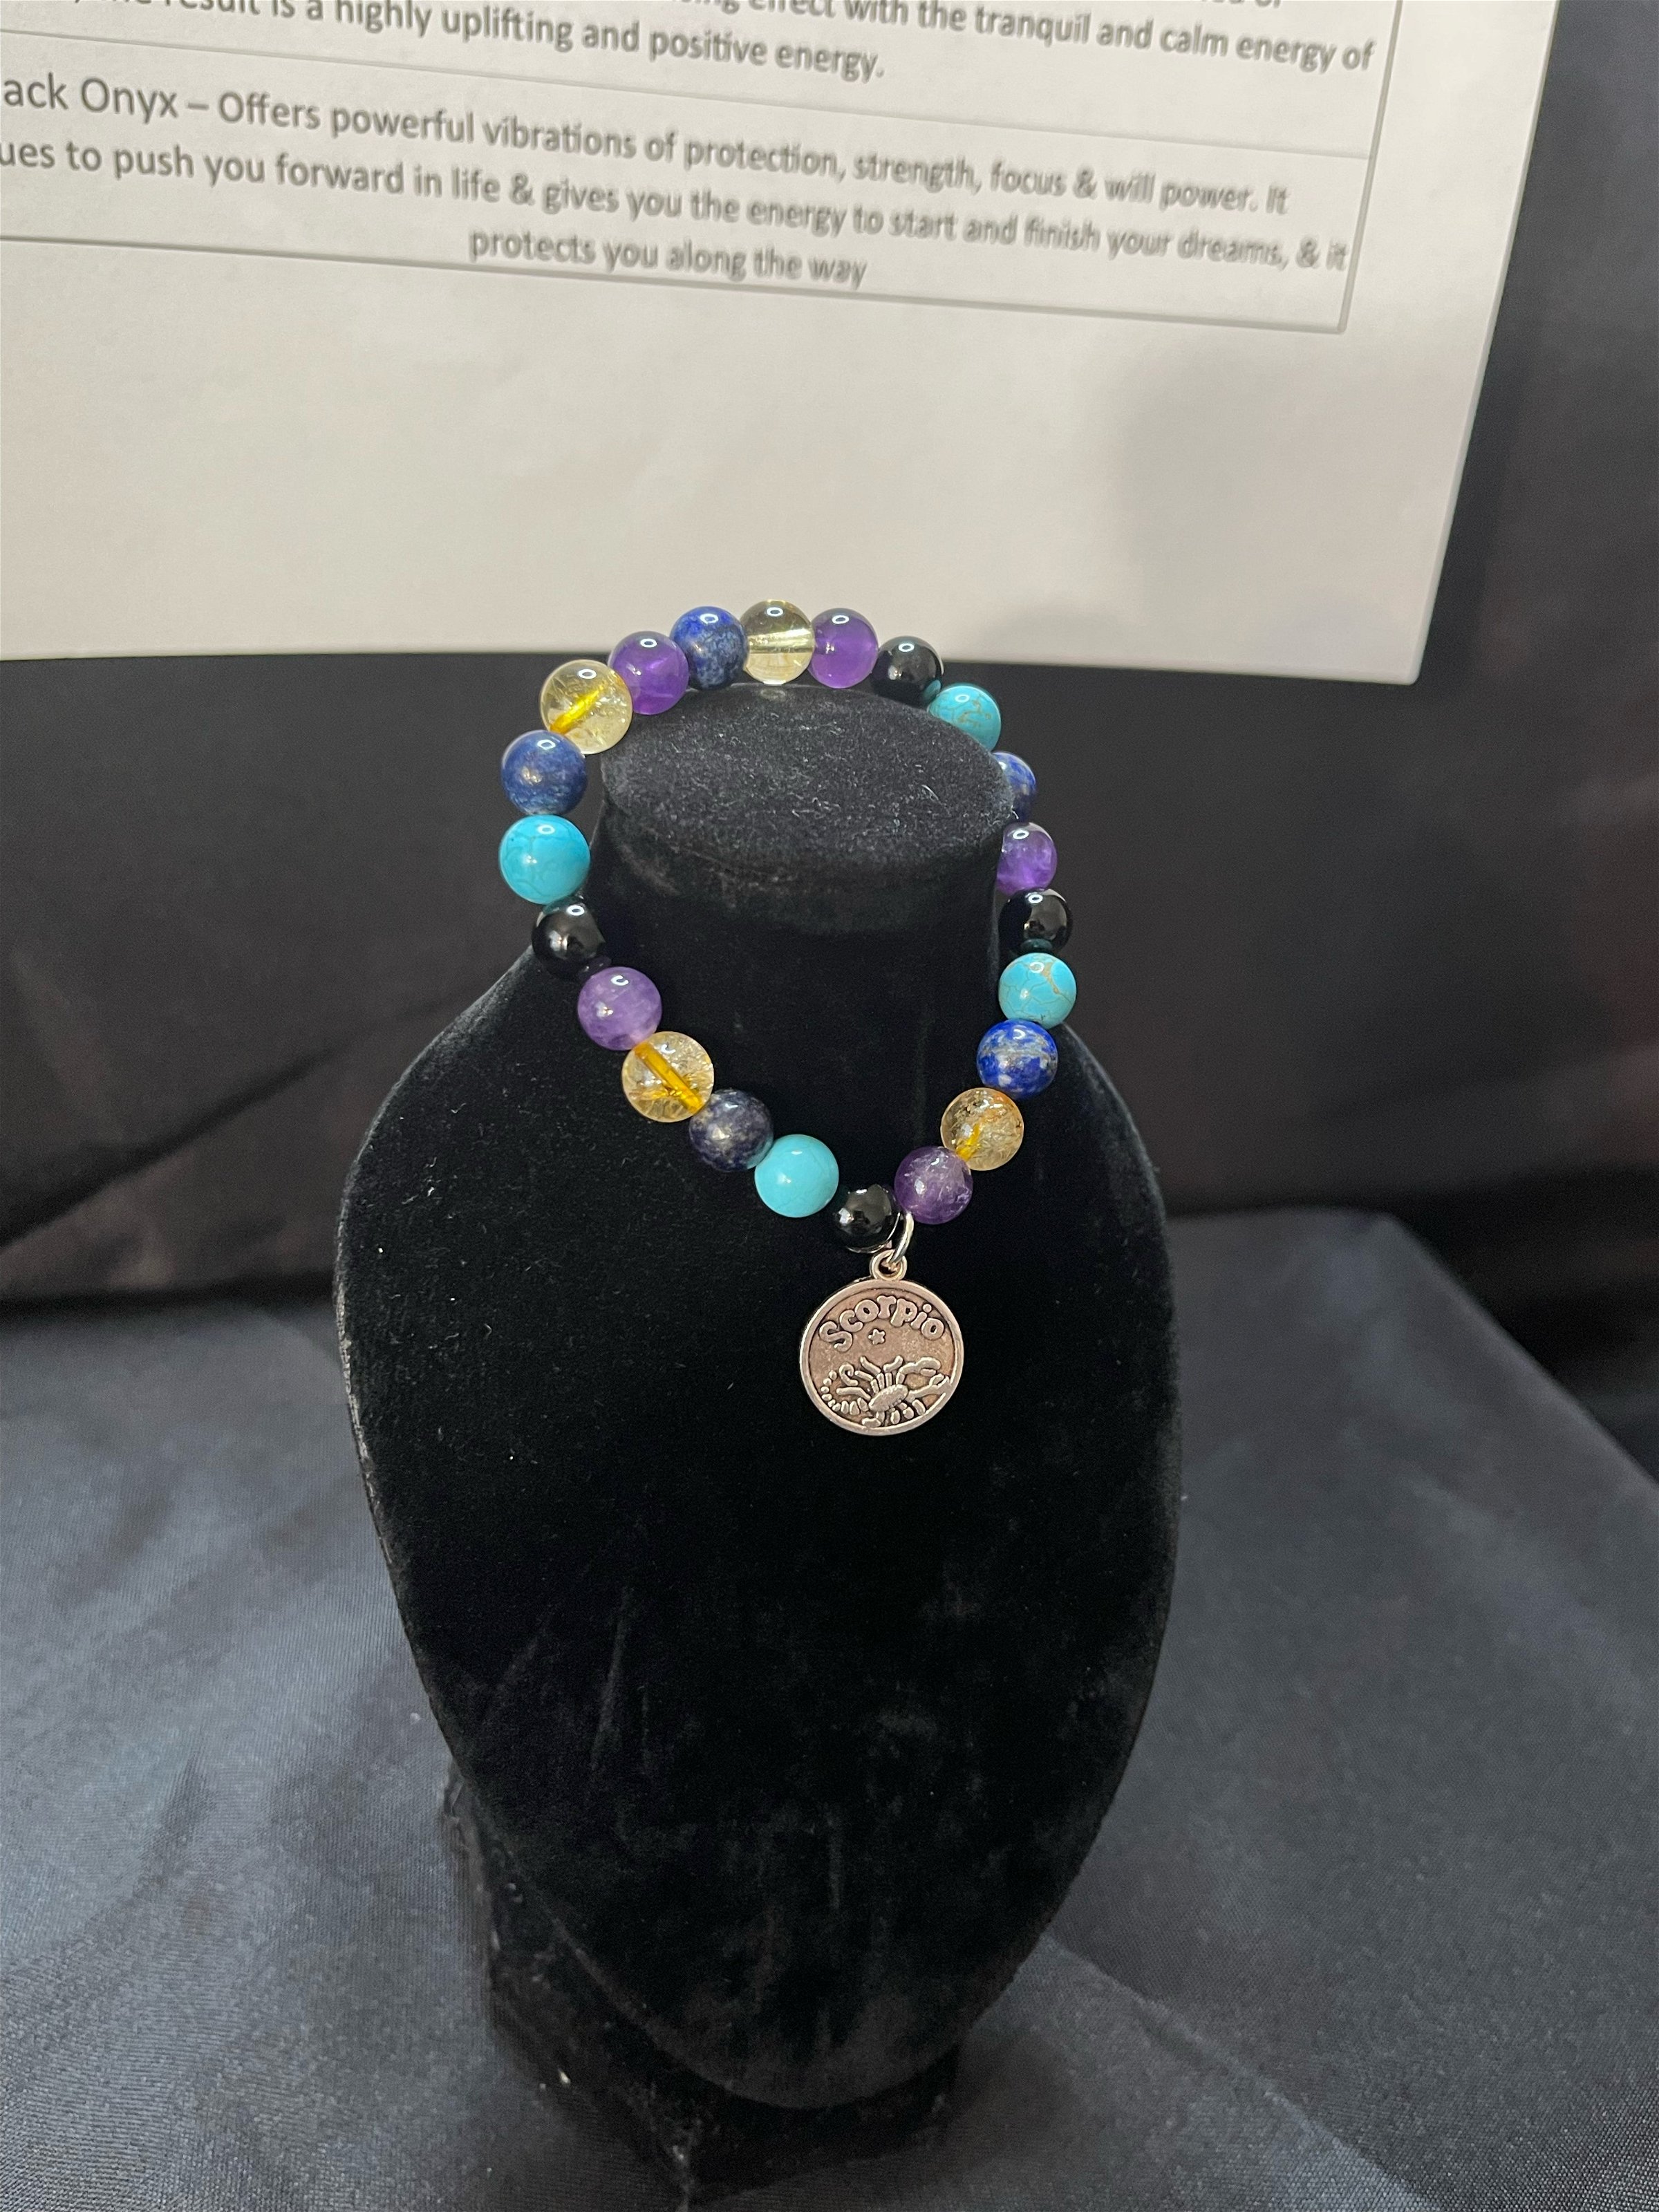 Aquarius Bracelet With Crystal Beads